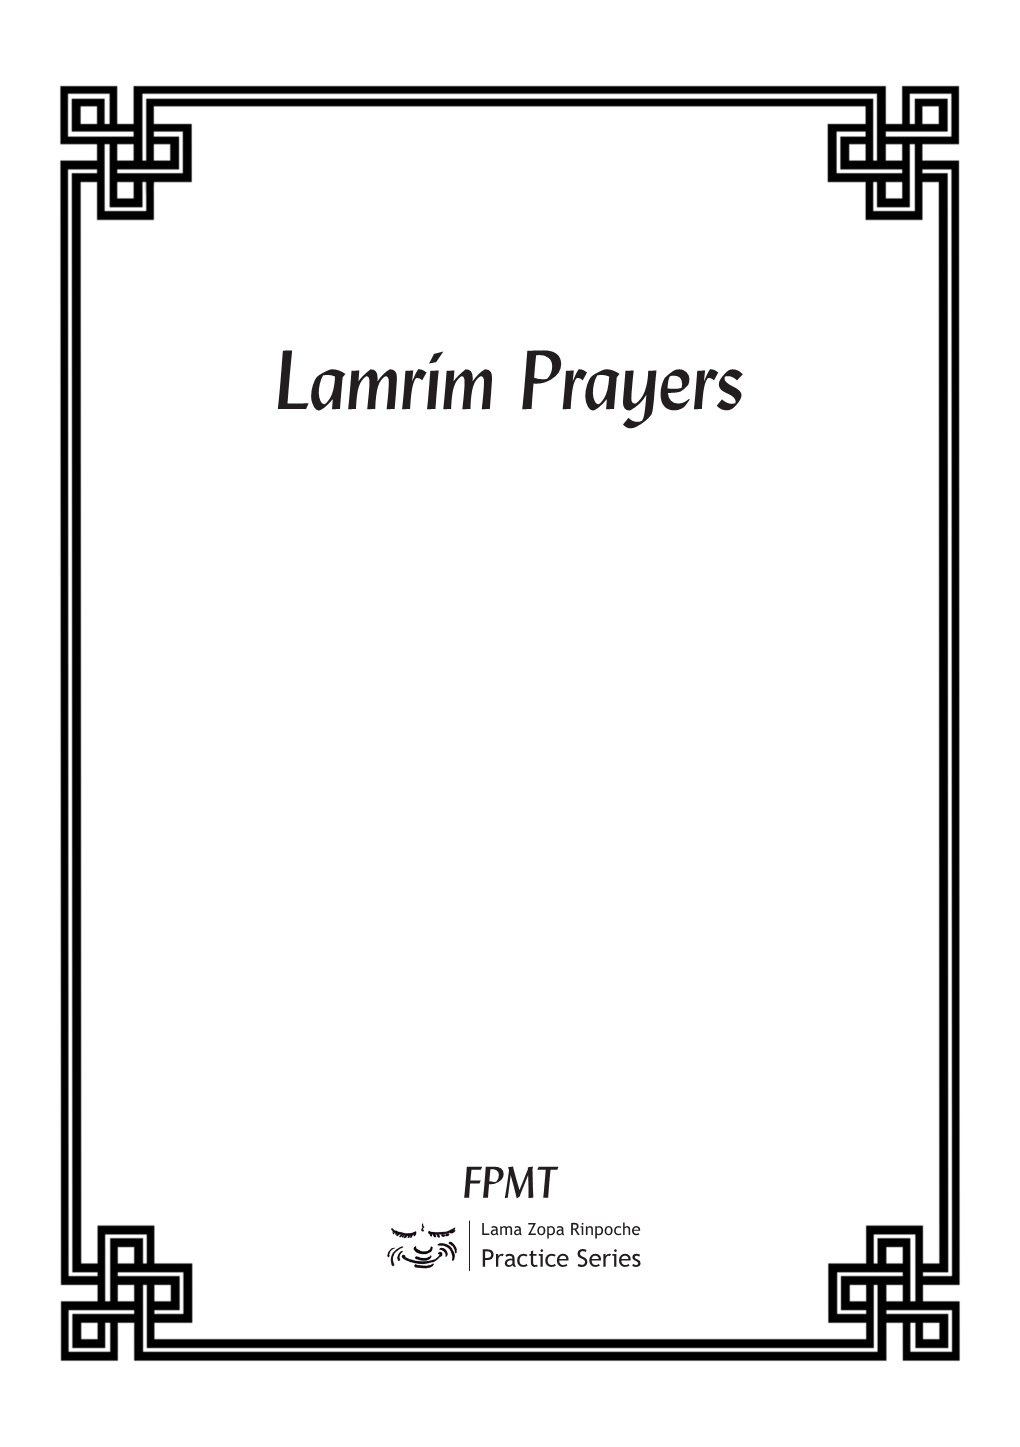 Lamrim Prayers